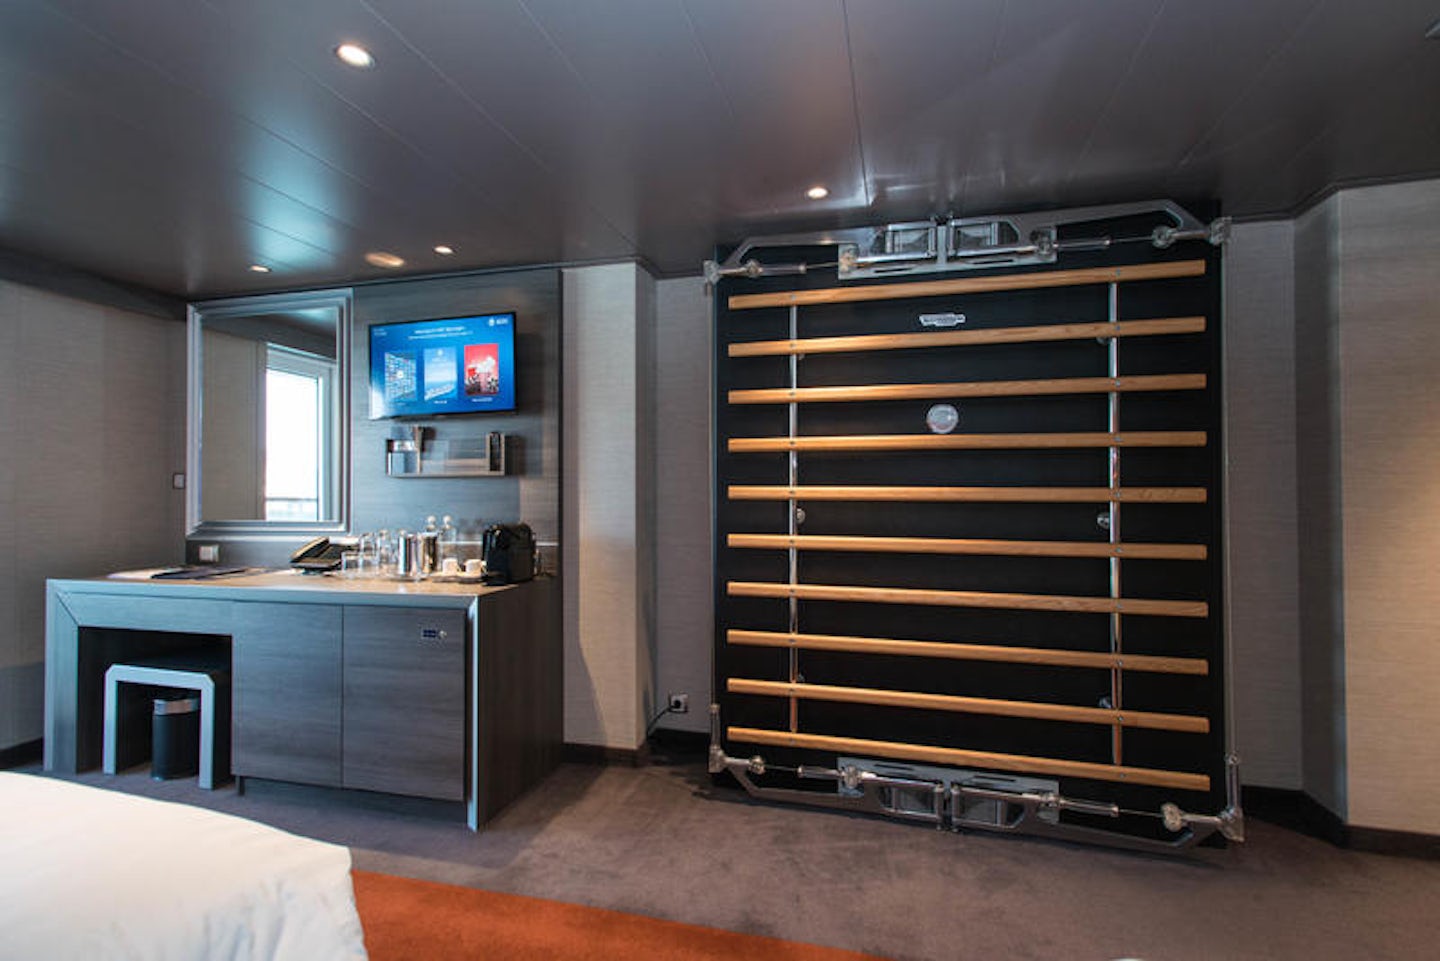 The MSC Yacht Club Wellness Deluxe Suite on MSC Meraviglia